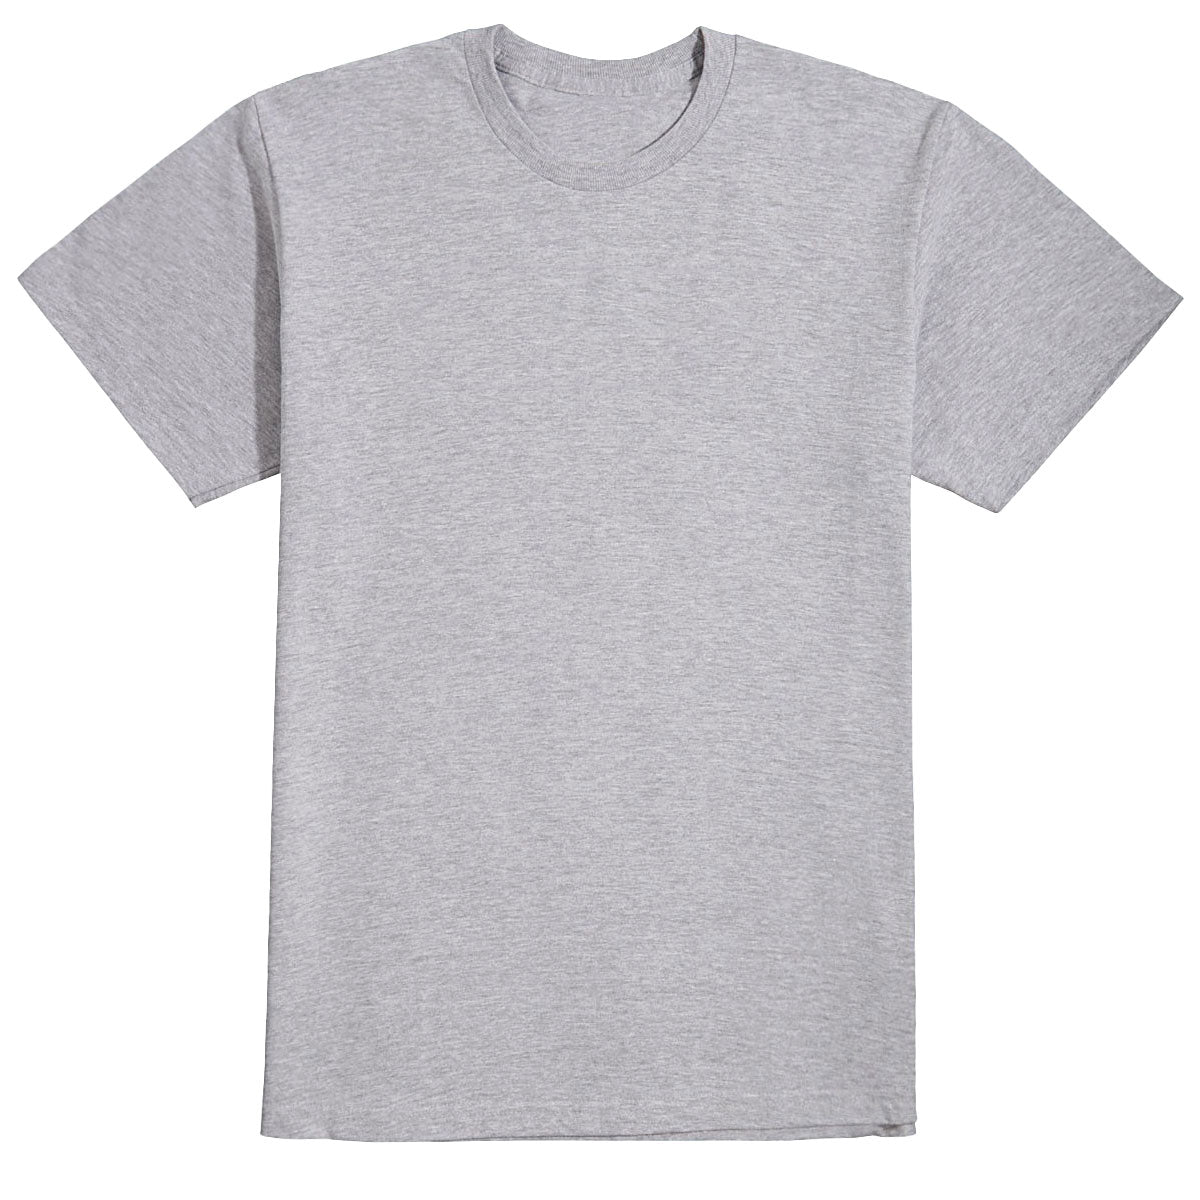 DALL-E AI Generated T-Shirt - Heather Grey - XL image 1